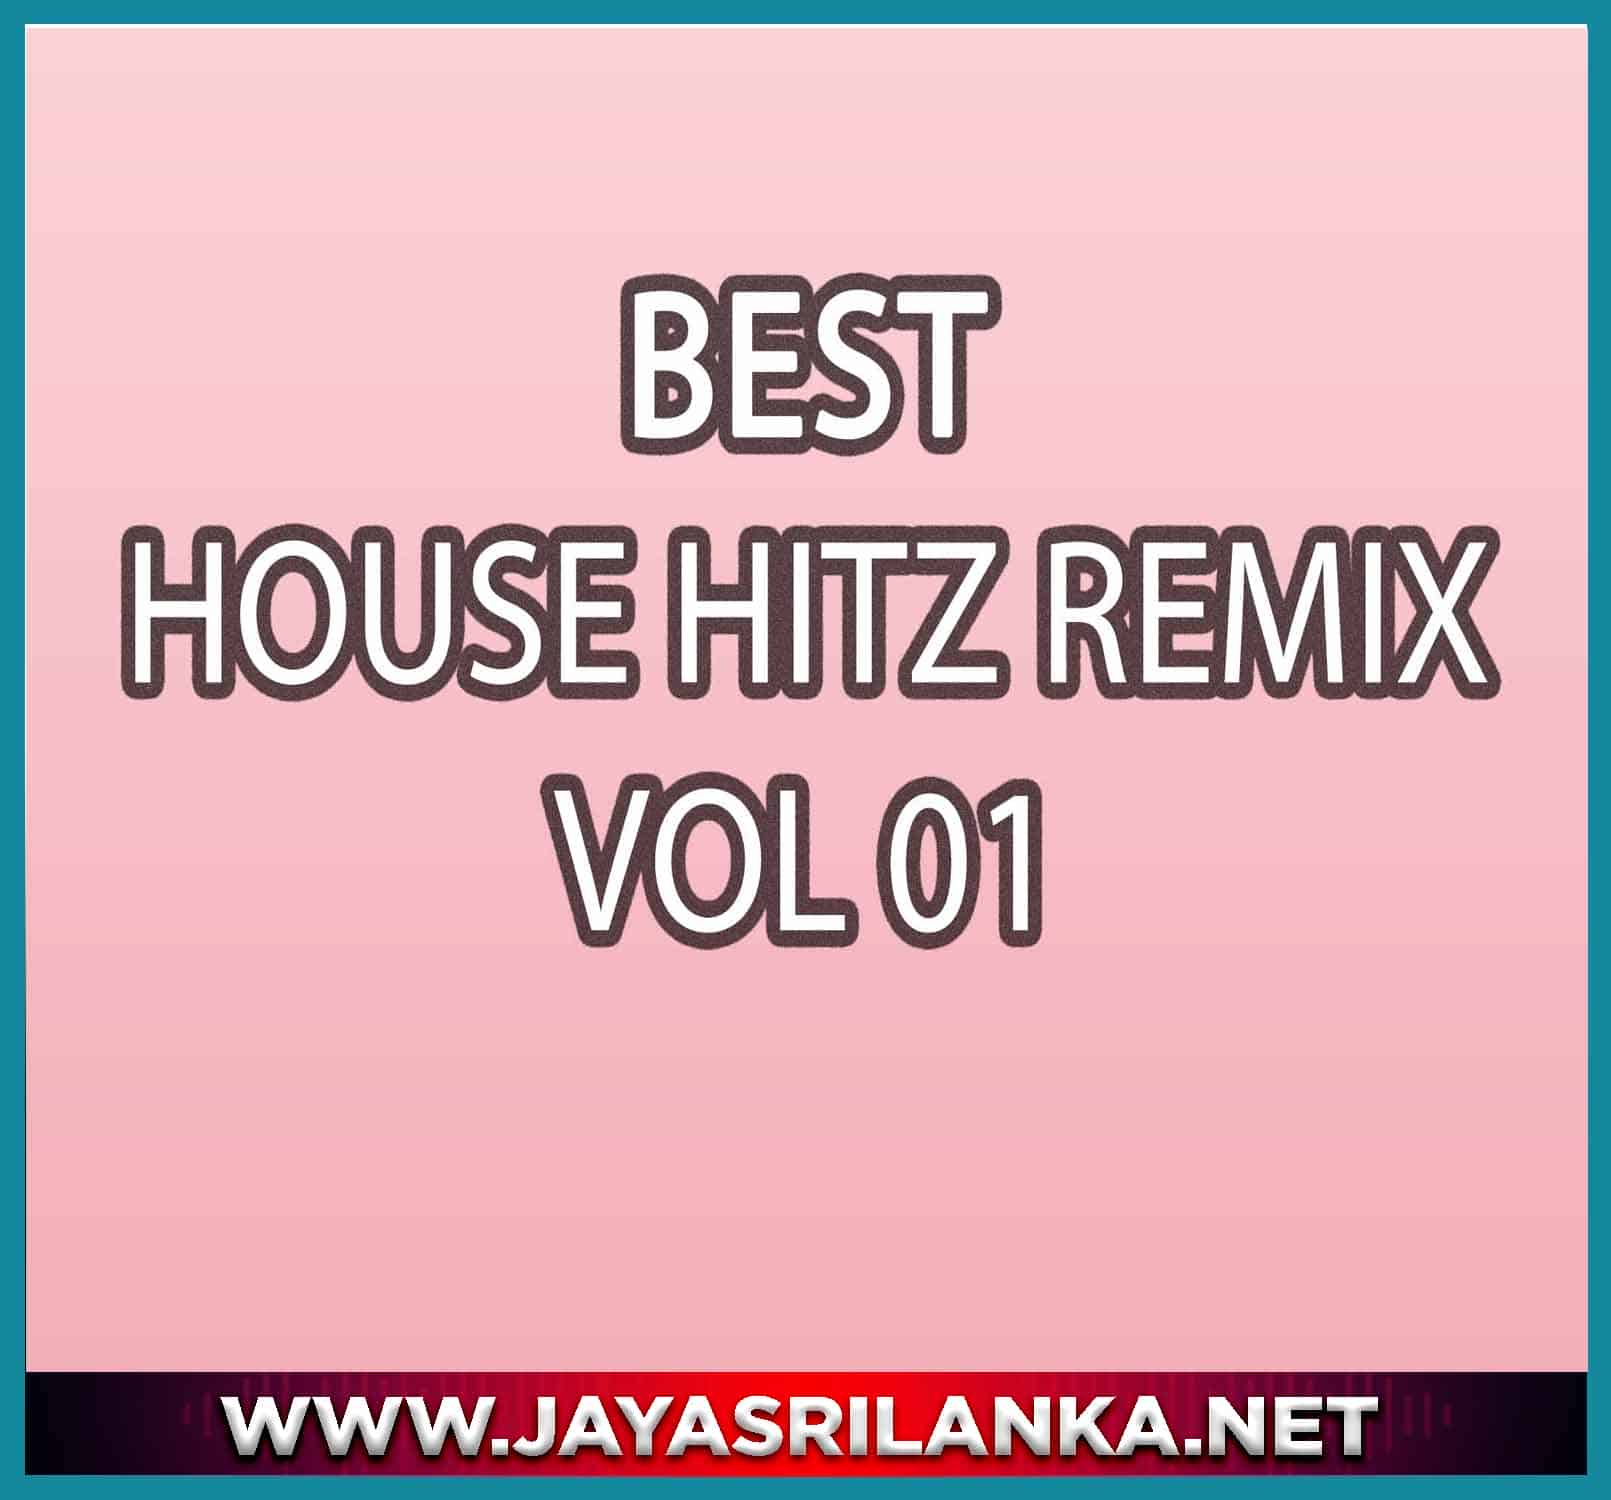 07 - Siththamak Wage Remix - Best House Hitz Vol 01 mp3 Image